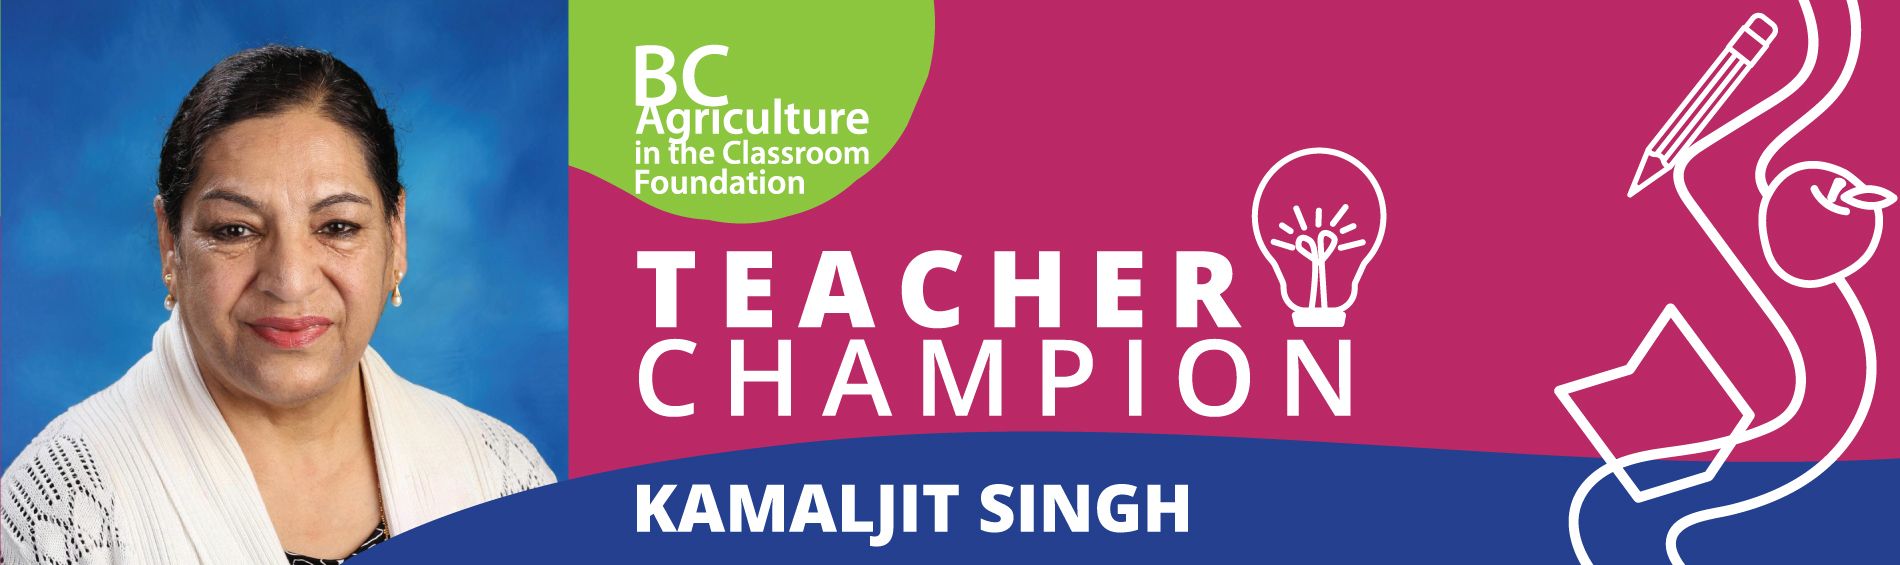 Teacher Champion - Kamaljit Singh